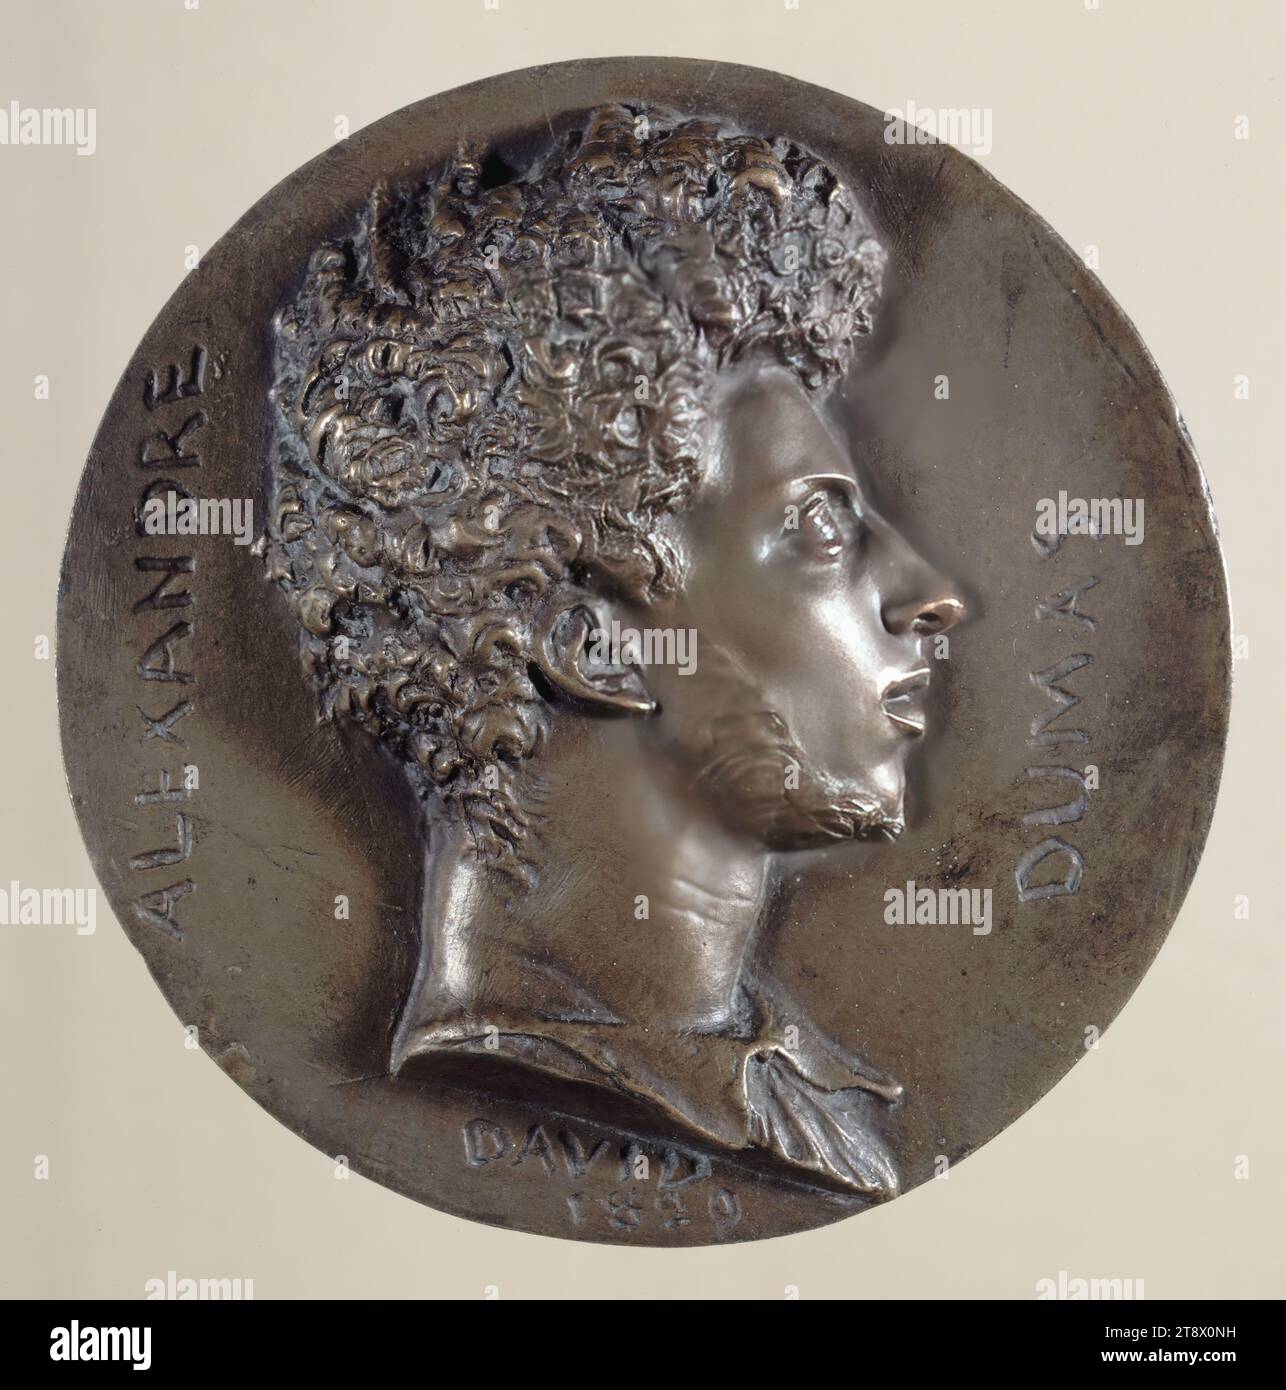 Portrait of Alexandre Dumas (1788-1870), Writer, David d'Angers, Pierre-Jean, Sculptor, Richard, Louis, Founder, Array, Sculpture, Medallion (sculpture), Dimensions - Work: Diameter: 12.4 cm Stock Photo